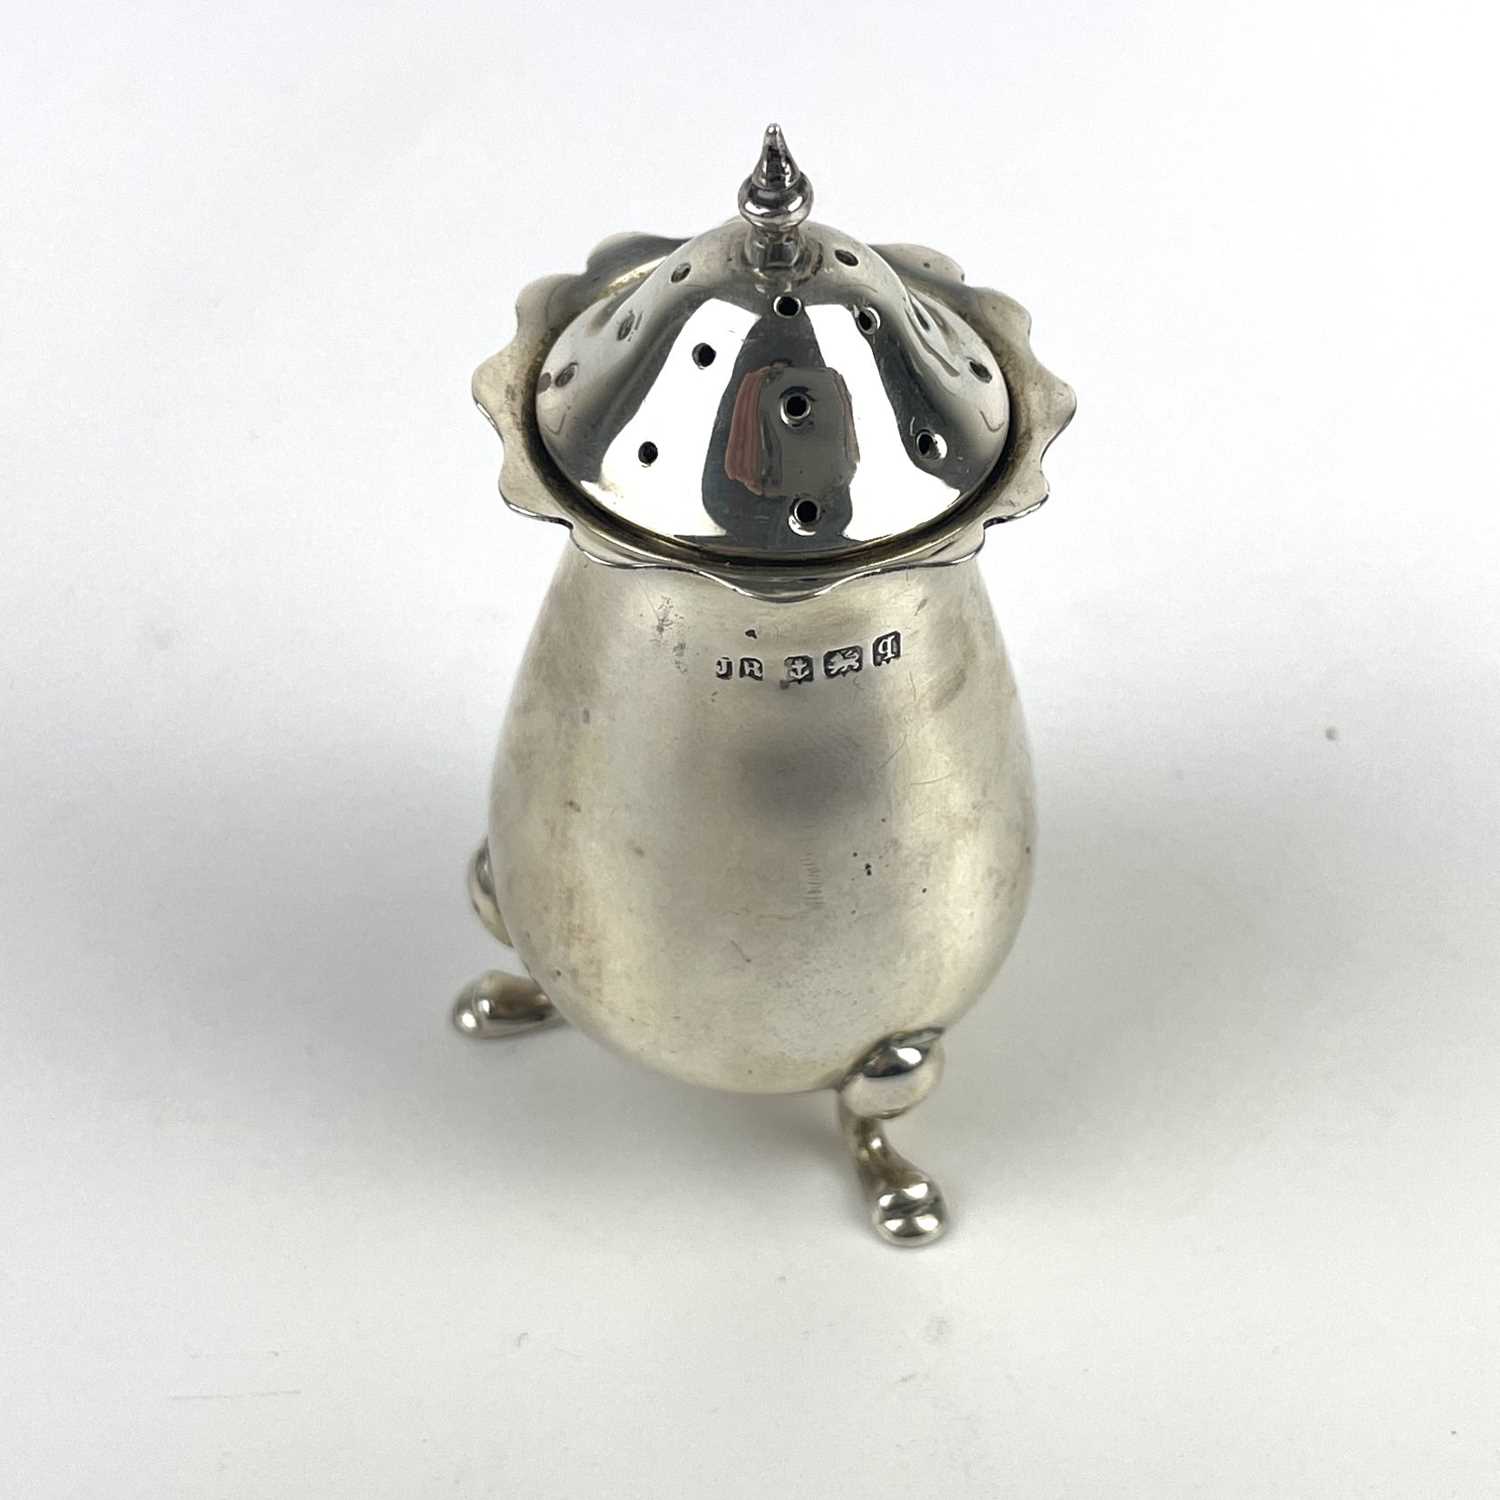 A George VI silver ashtray, a silver pepperette and a condiment spoon. - Image 4 of 6